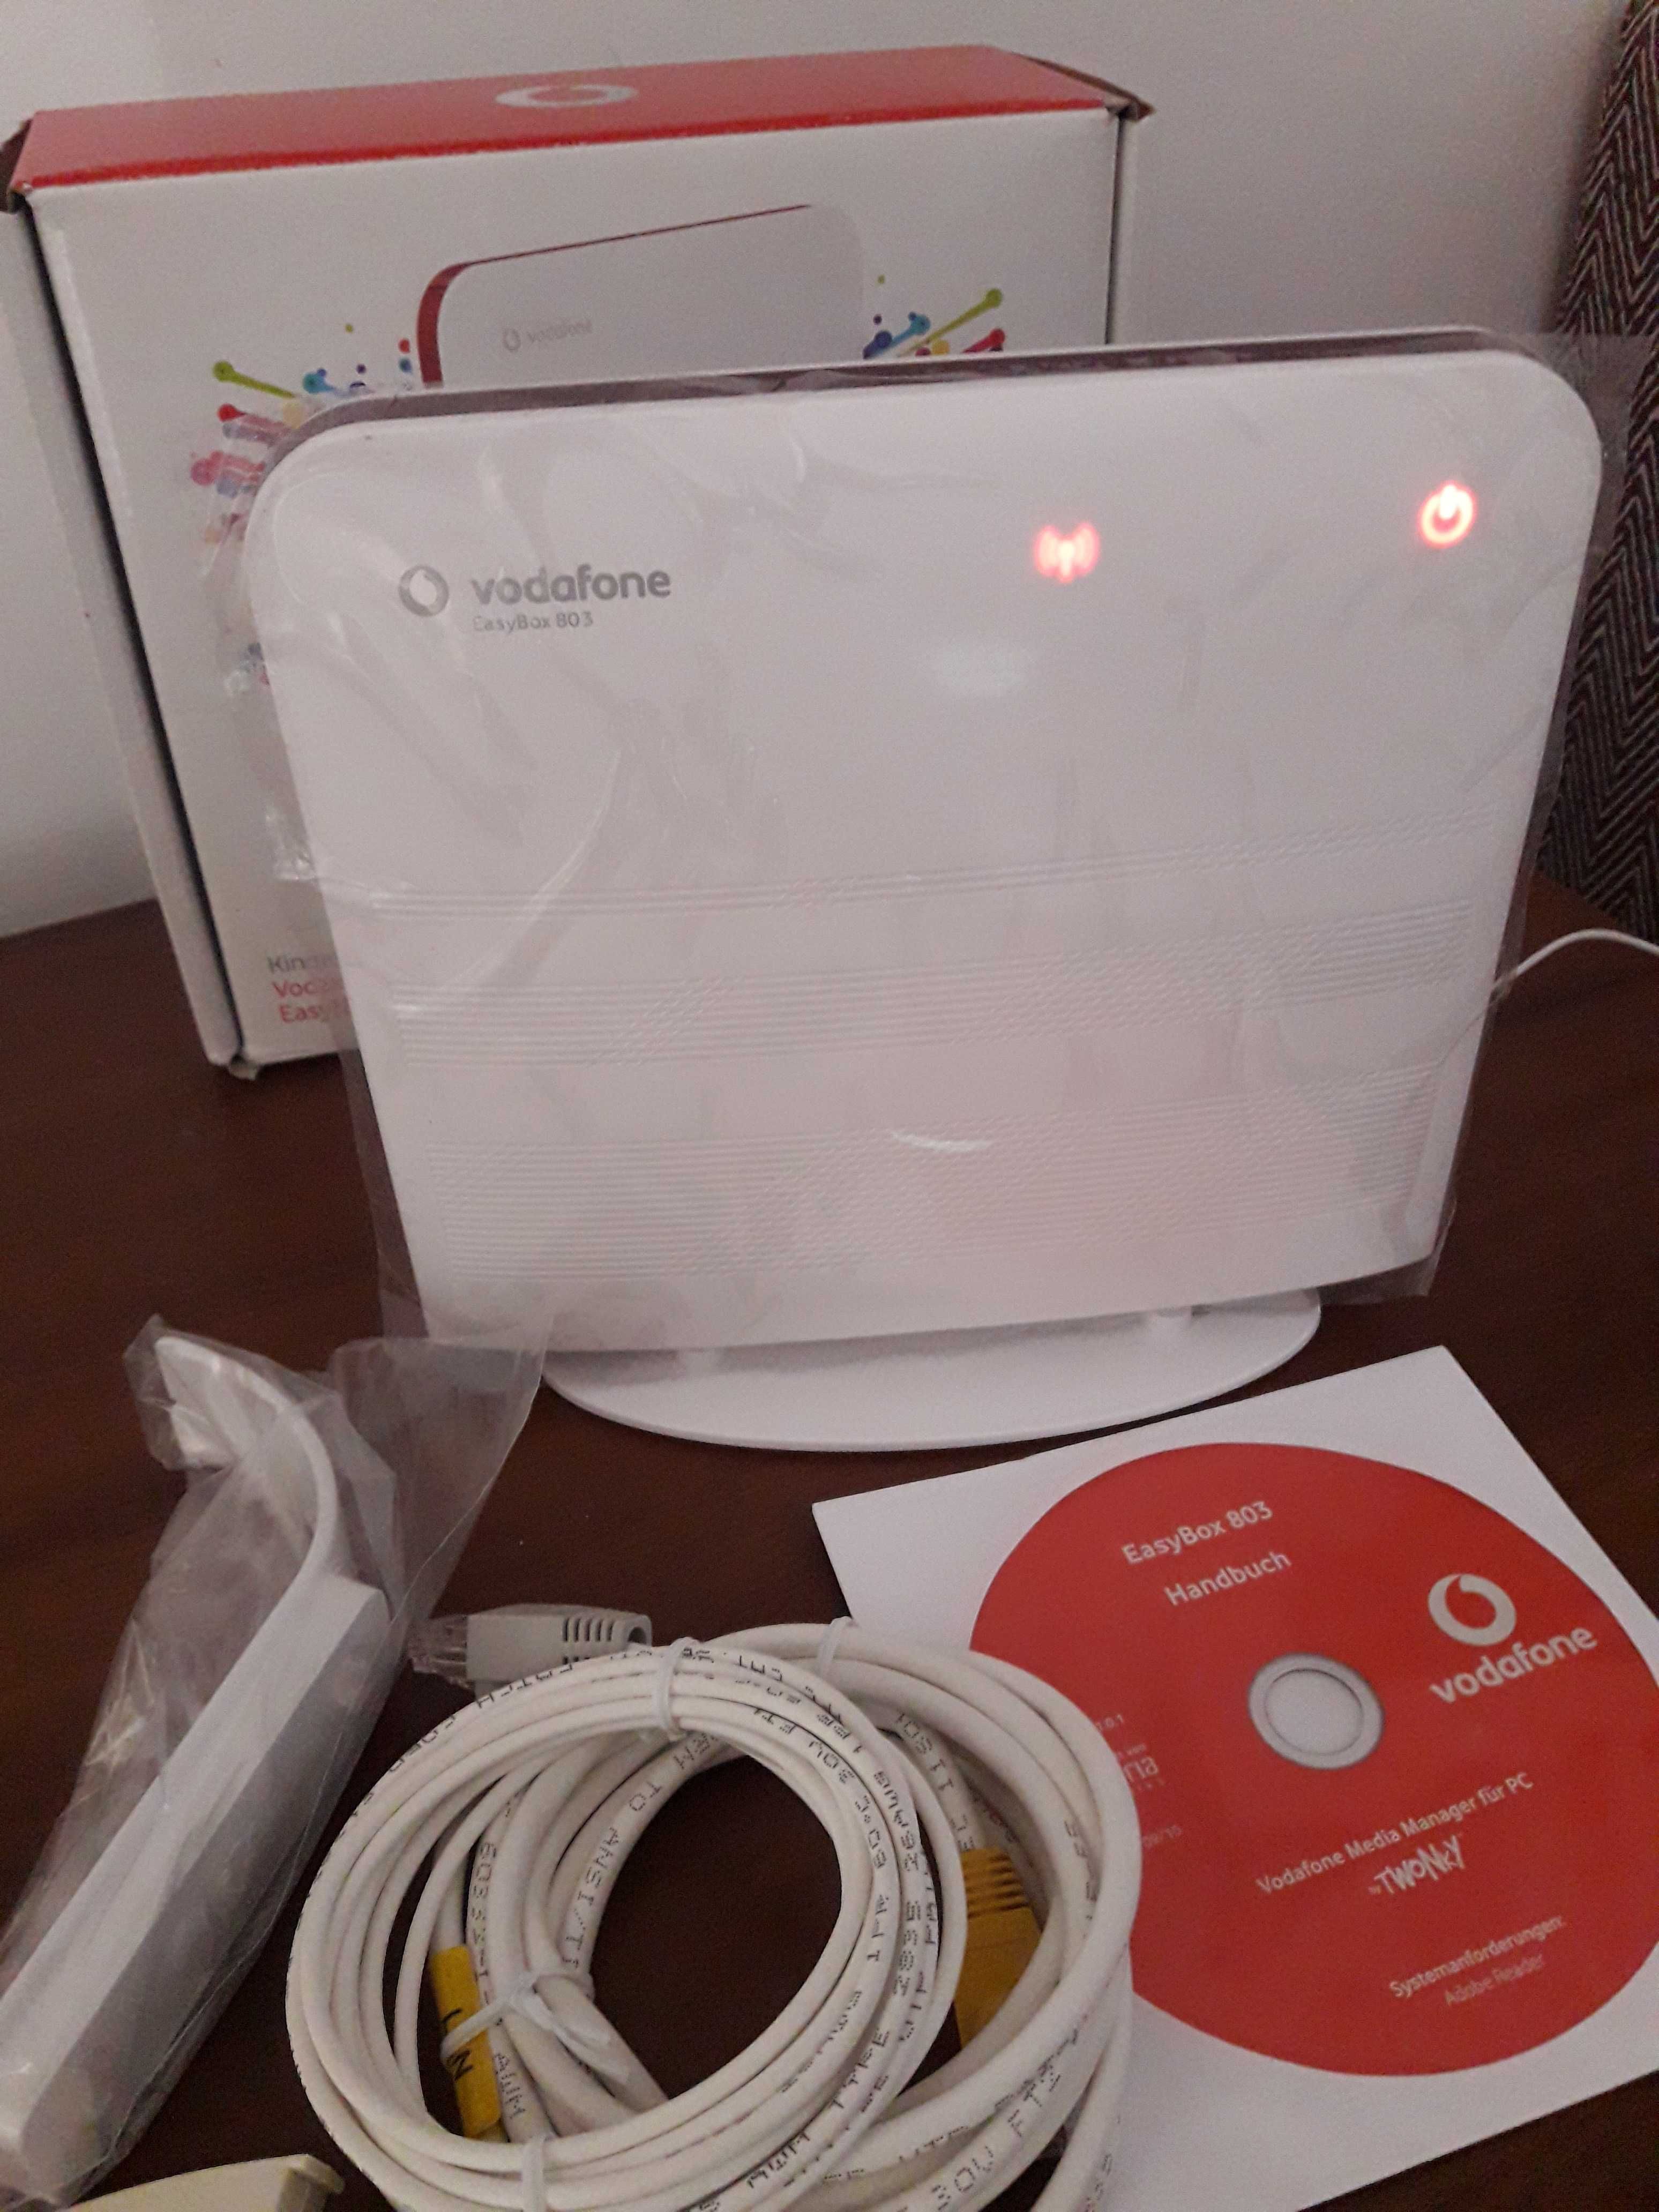 Router ISDN Vodafone model EASY BOX 803 wi-fi.